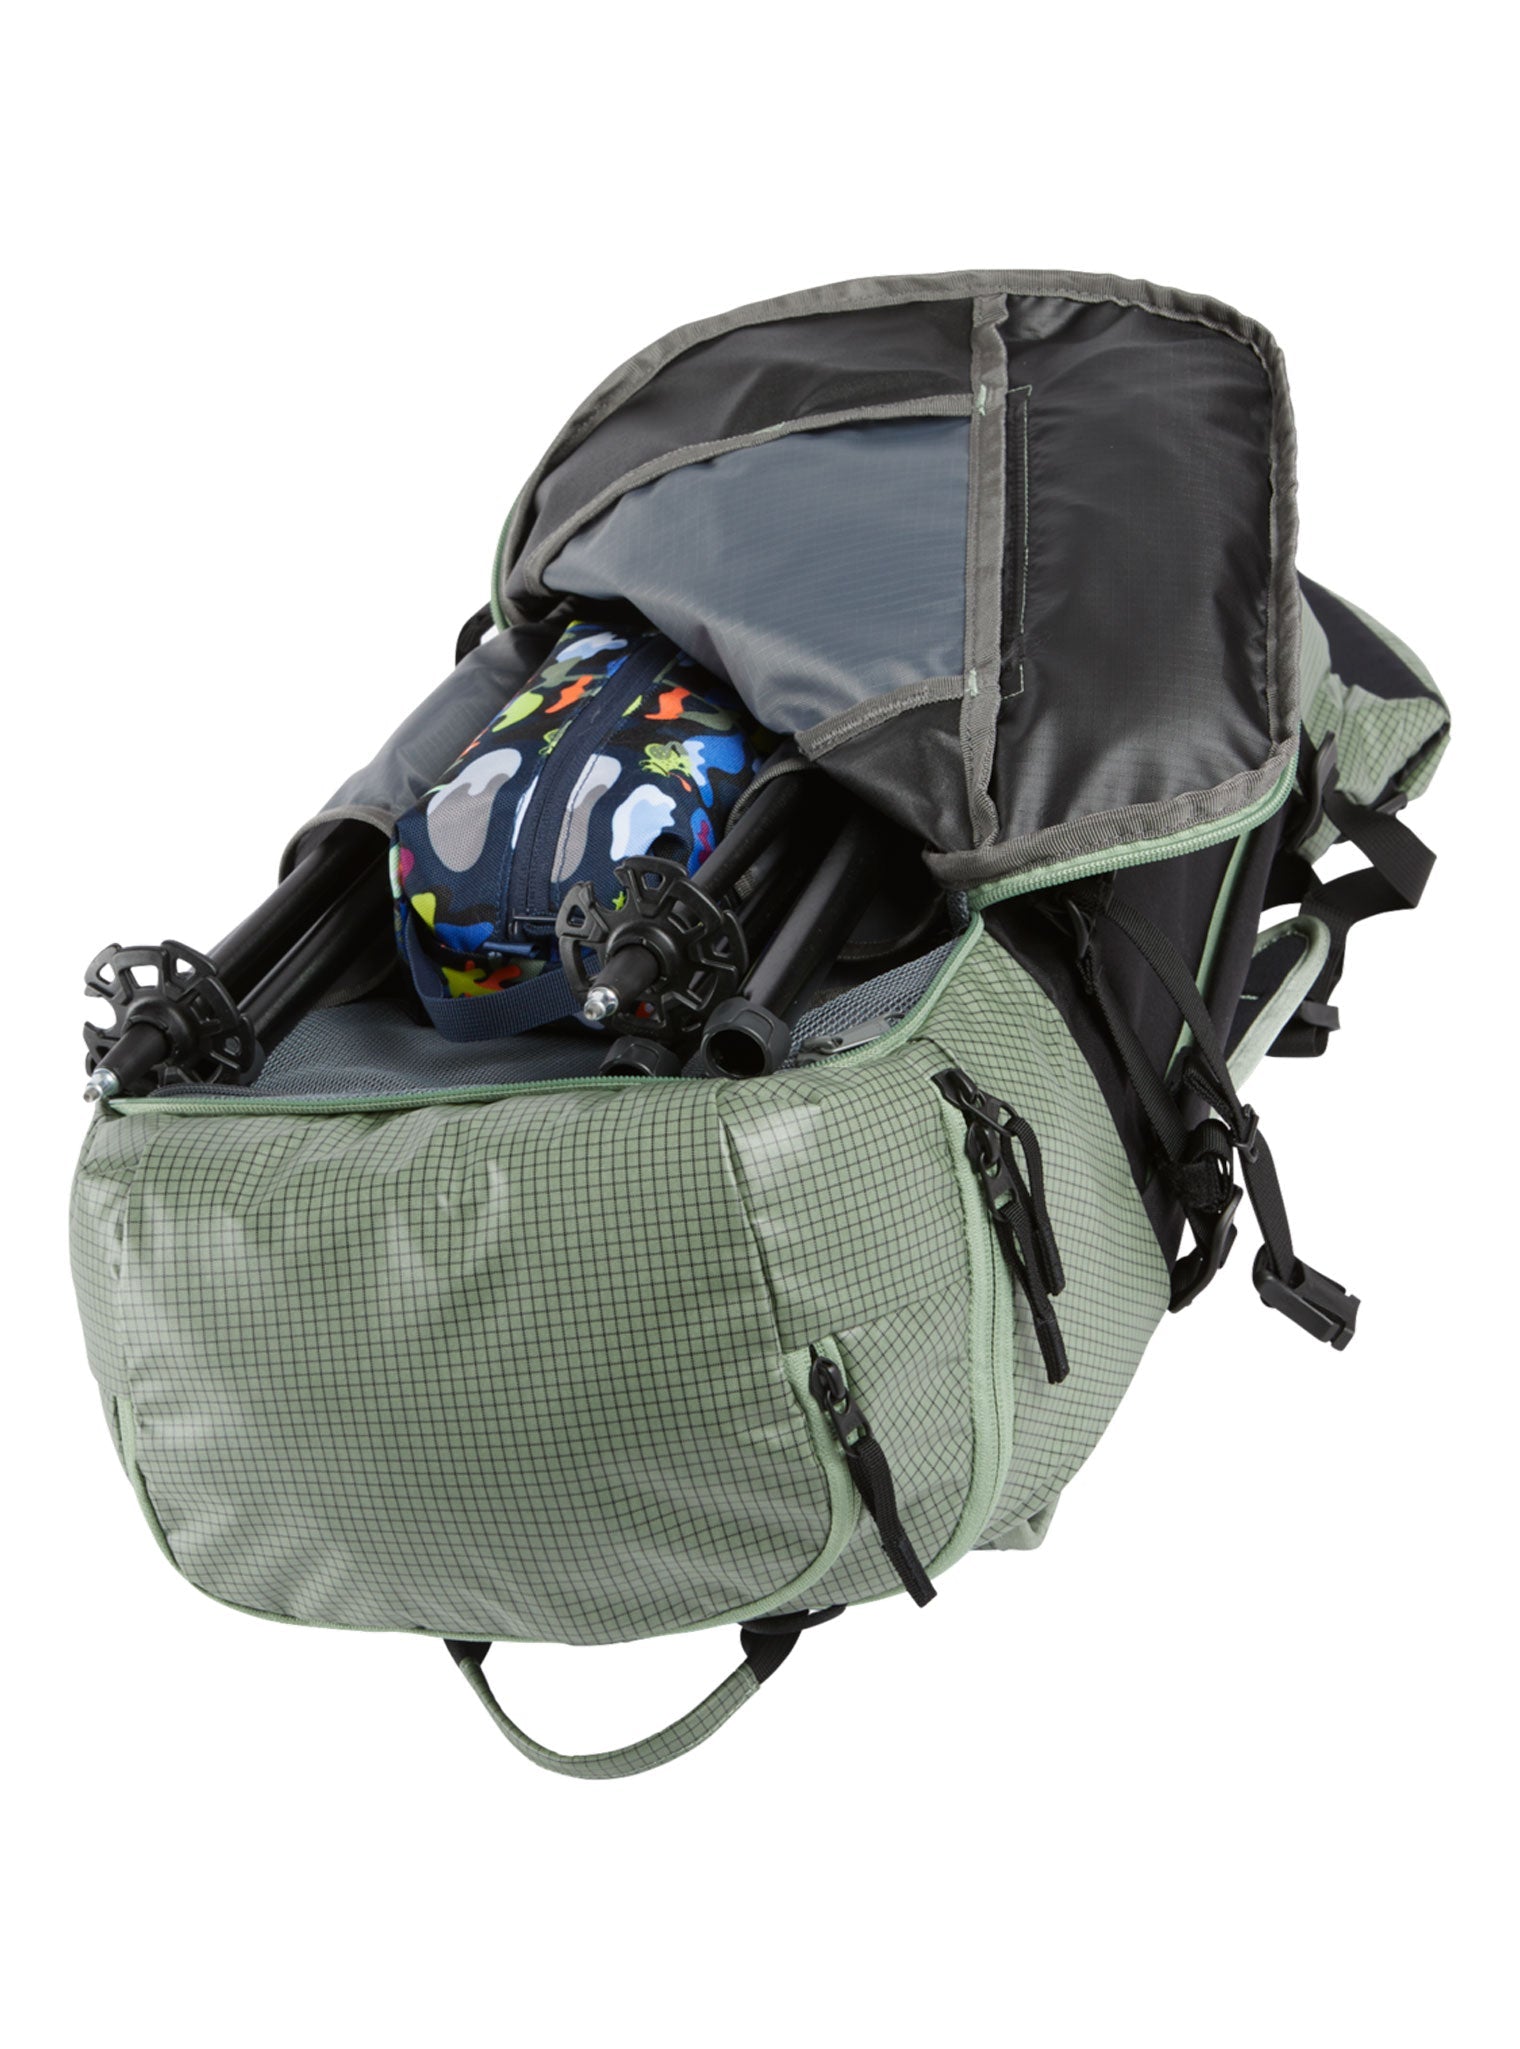 [ak] Dispatcher 35L Backpack